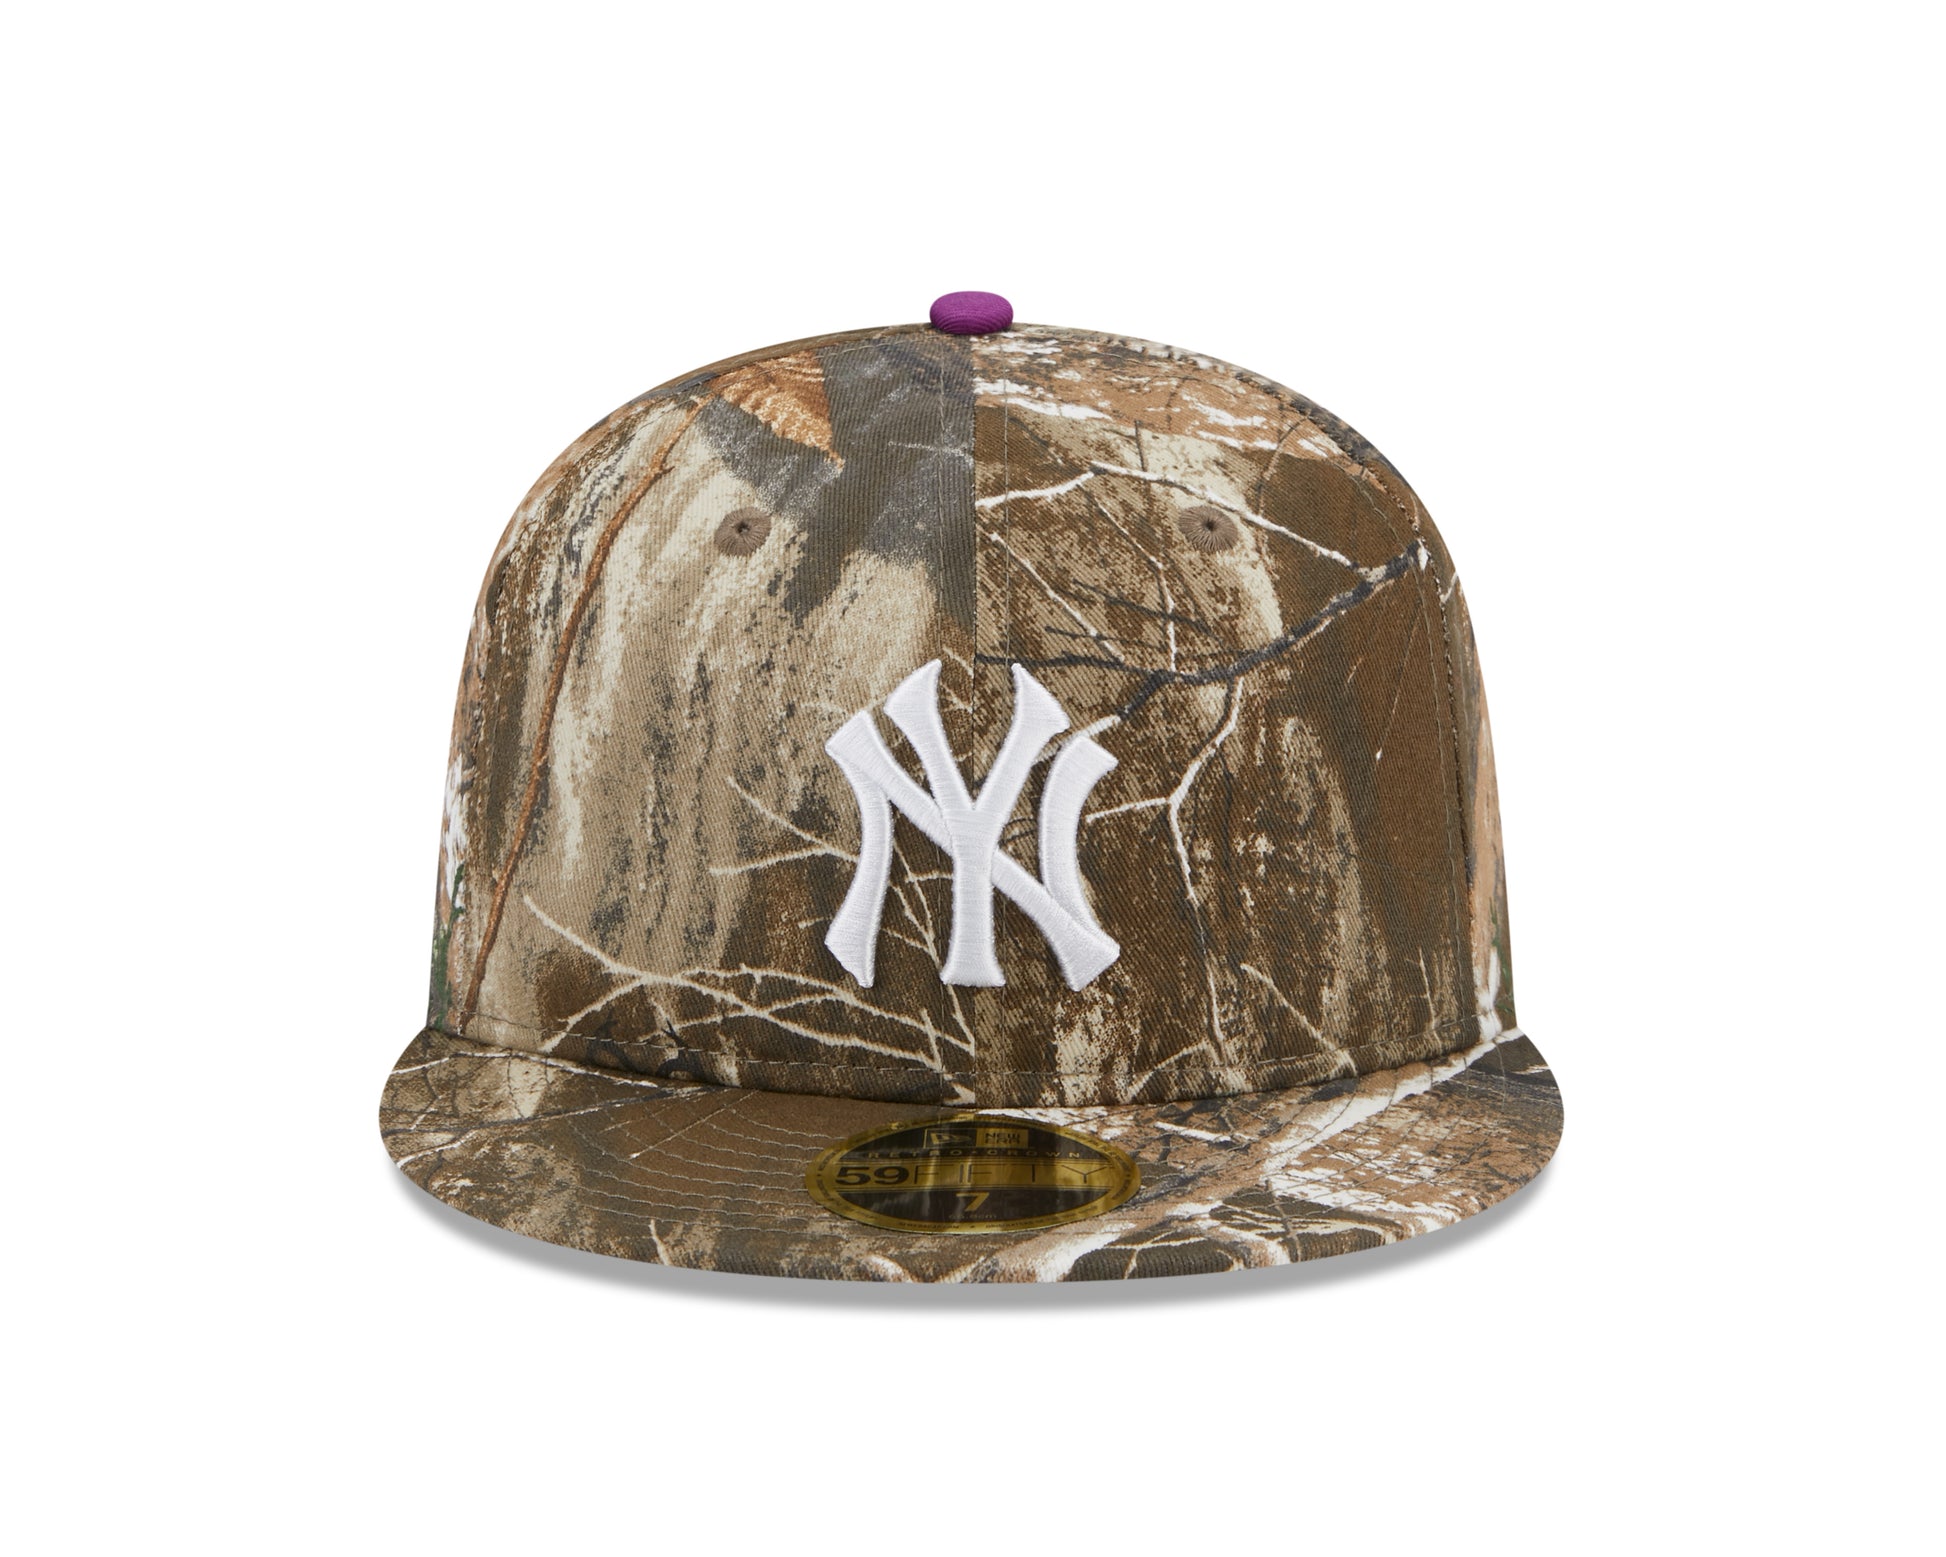 New Era - 59fifty Retro Crown - New York Yankees Real Tree - Camo - Headz Up 